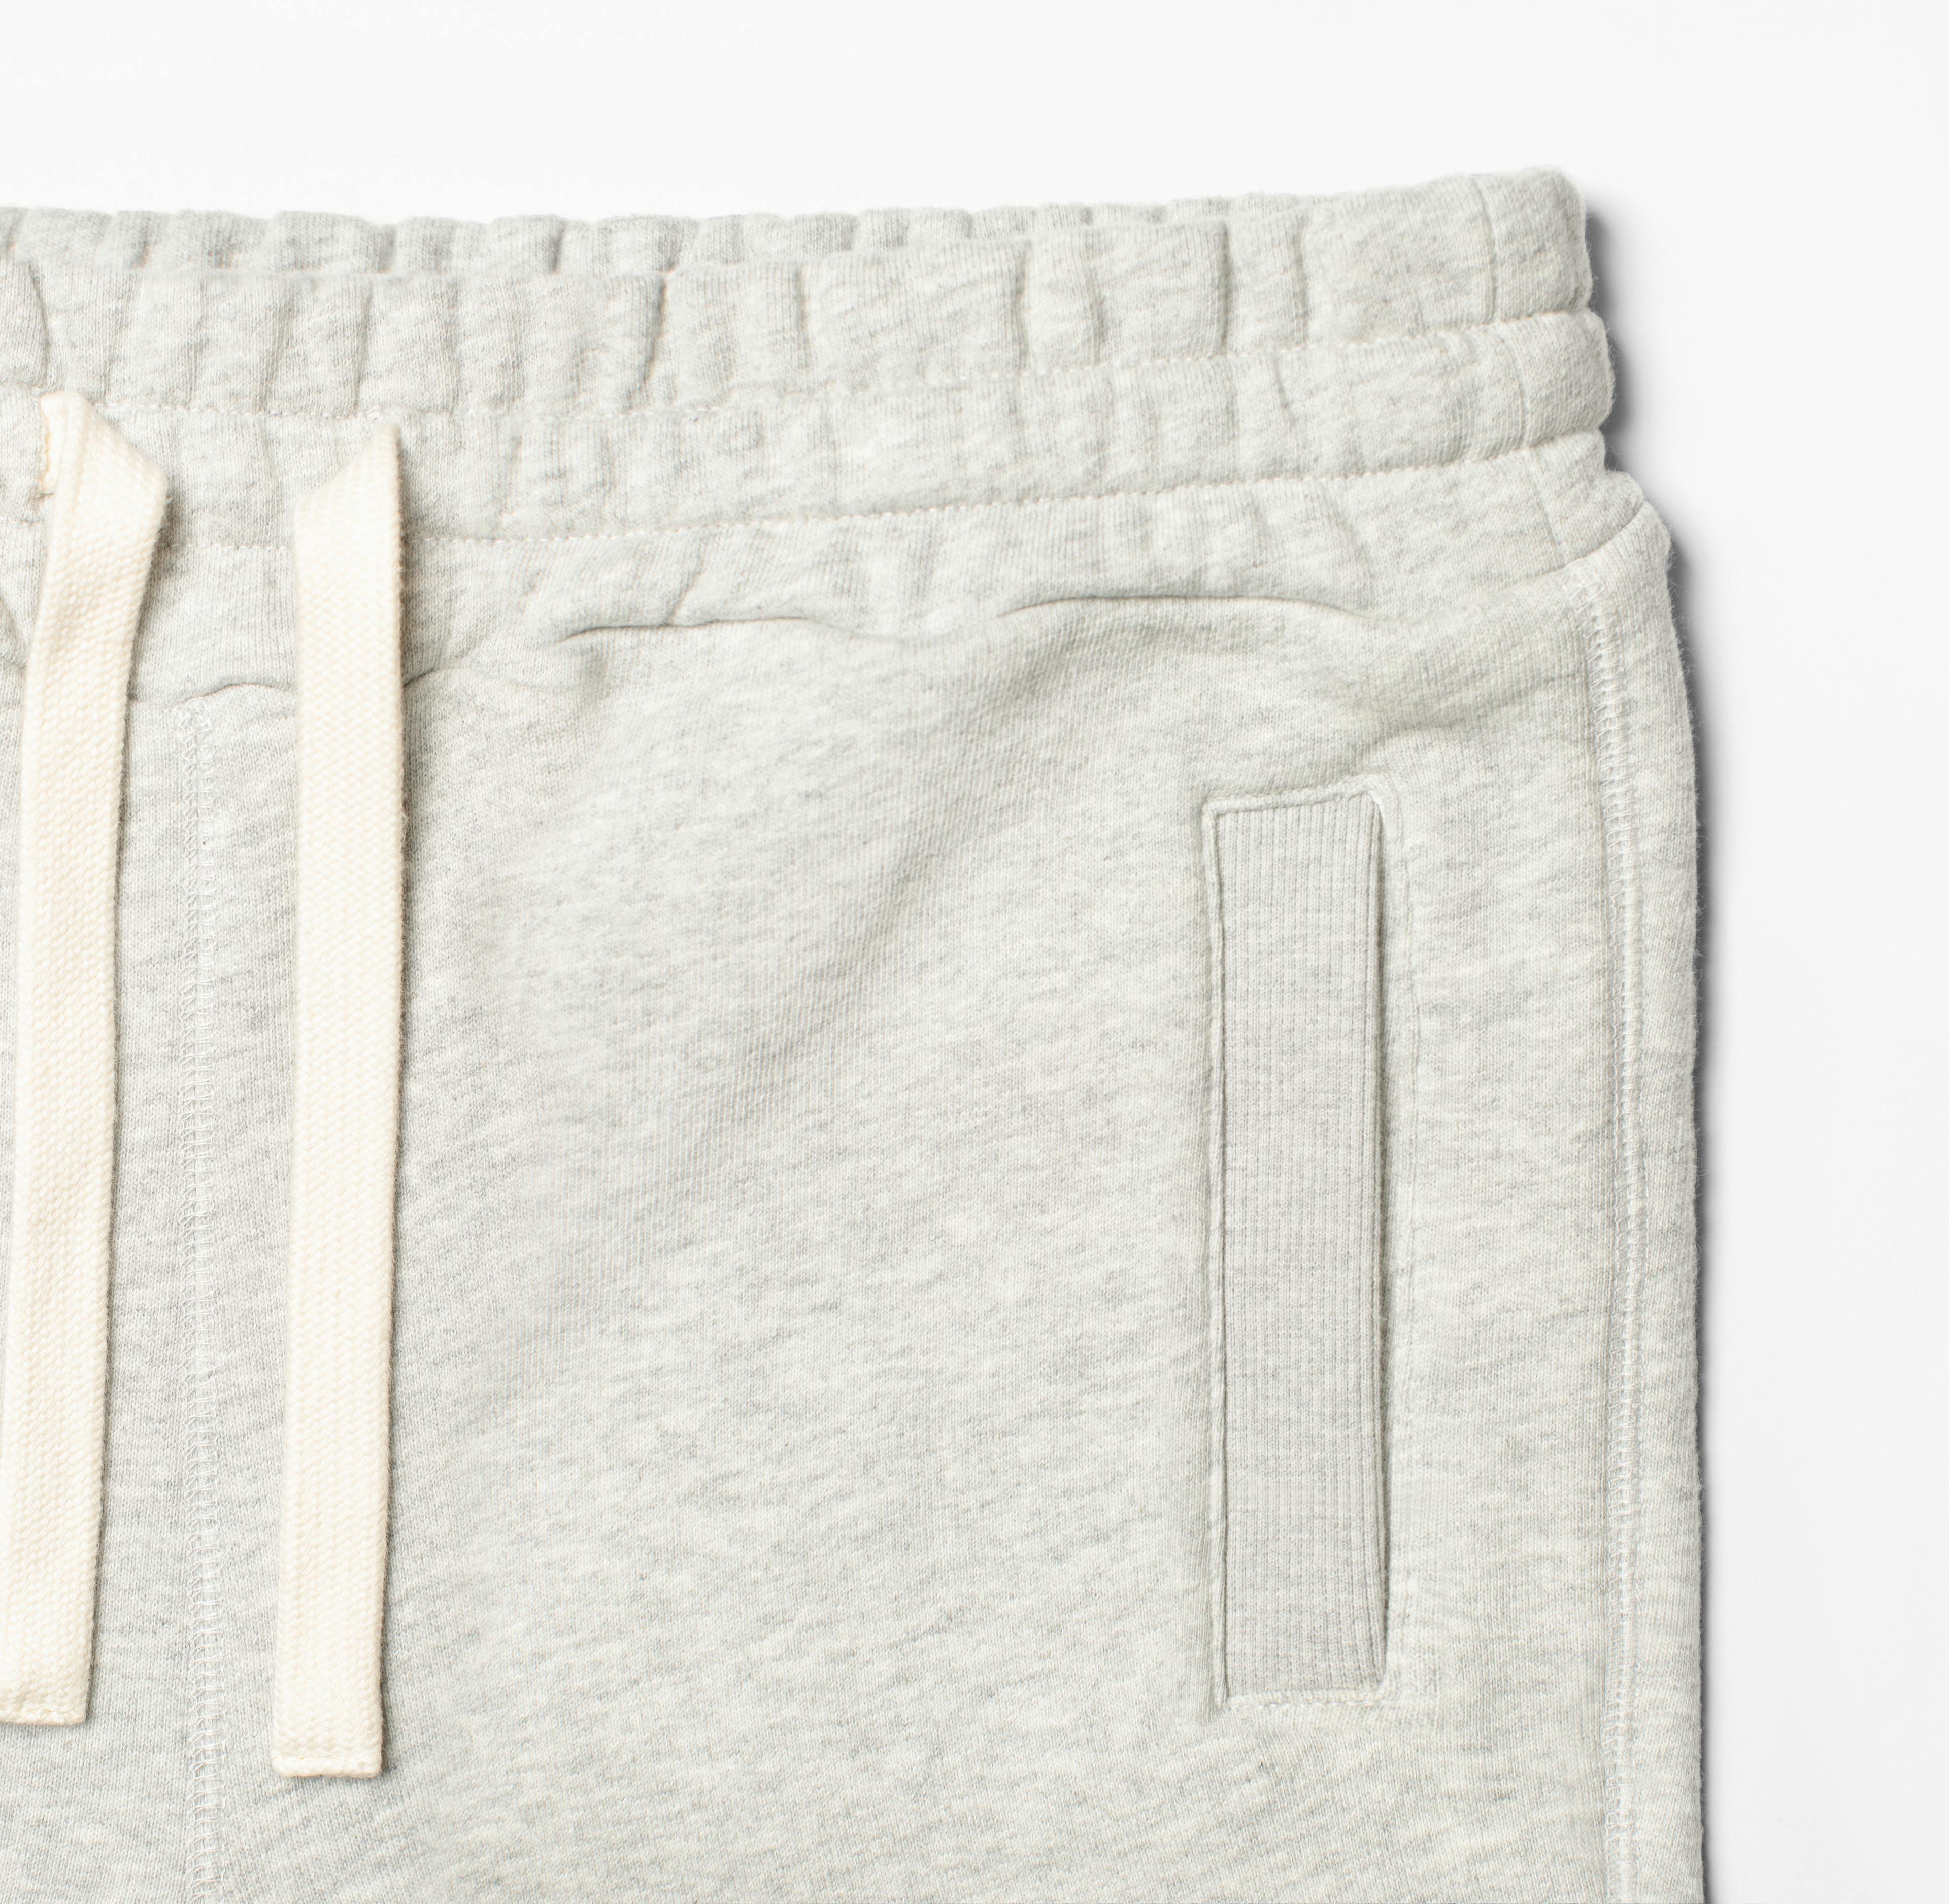 Lounge & Leisure Sweatpants (Men's Fit / Oatmeal) - Pocket Detail 